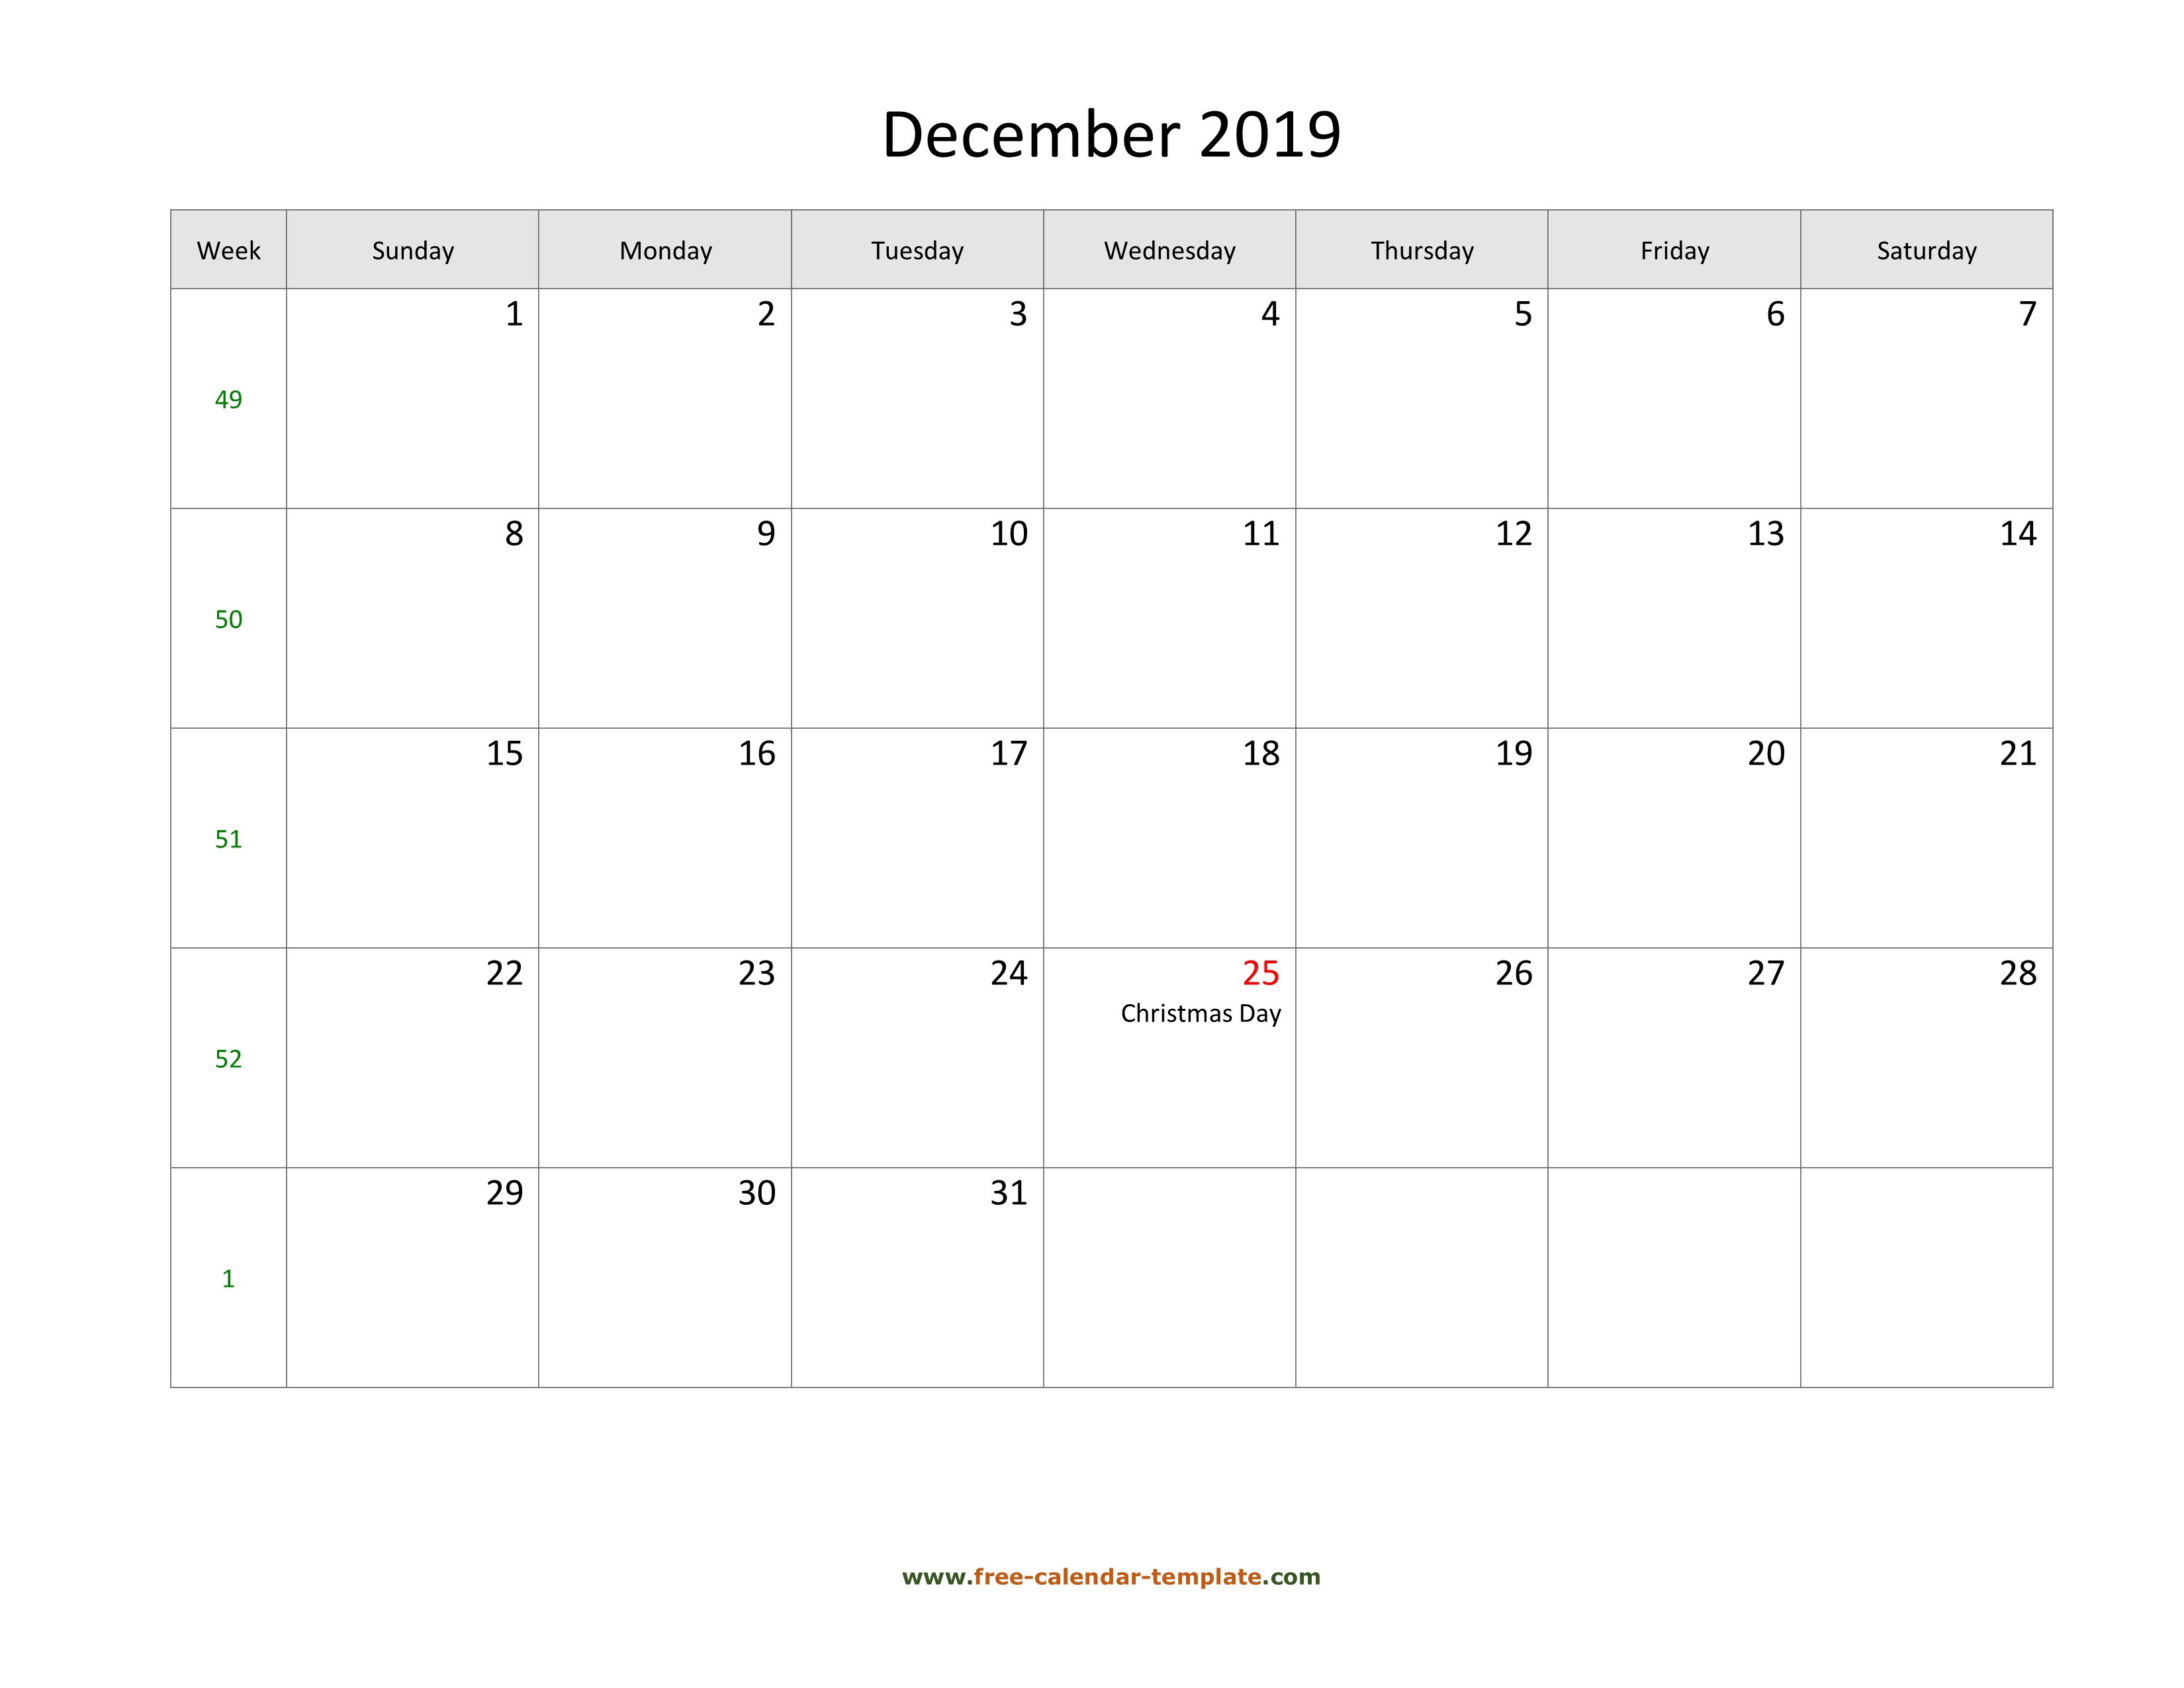 December 2019 Free Calendar Tempplate | Freecalendar regarding Writable December 2020 Calendar